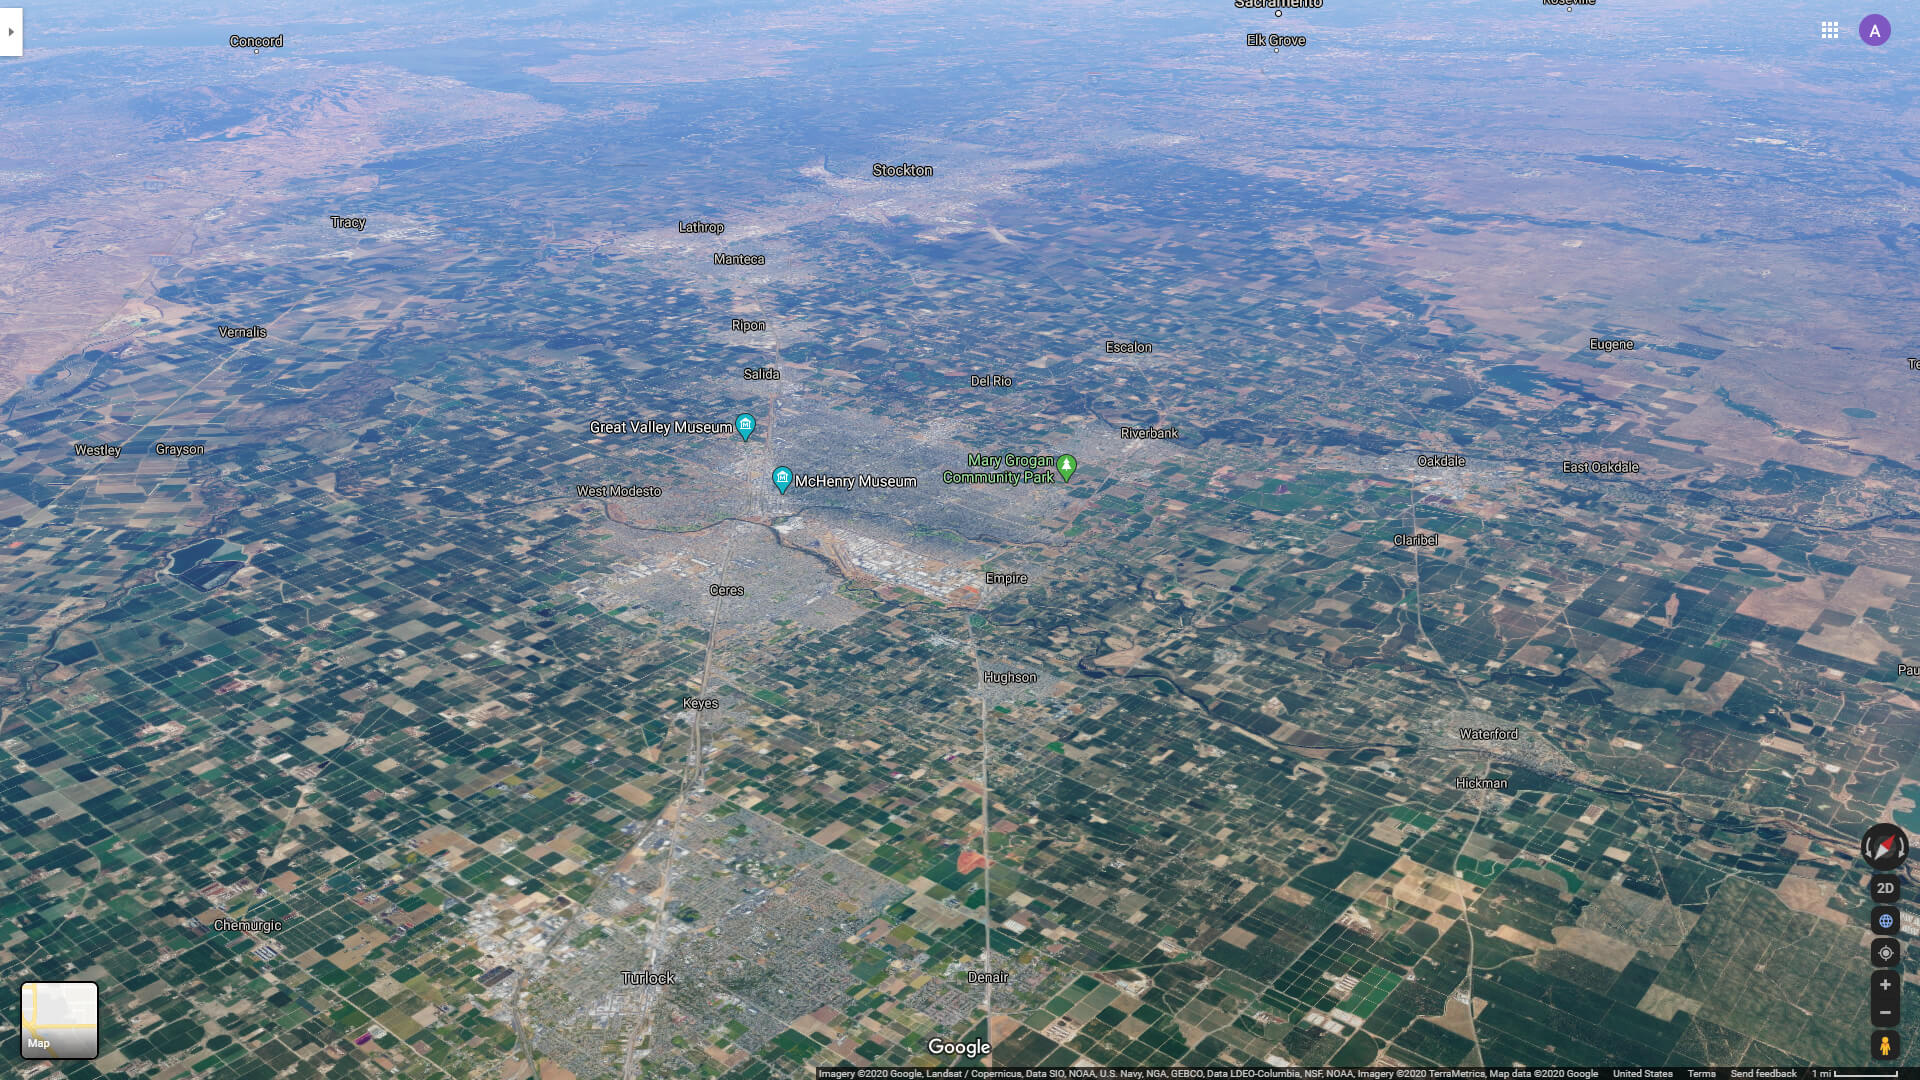 Modesto Aerial View Map California